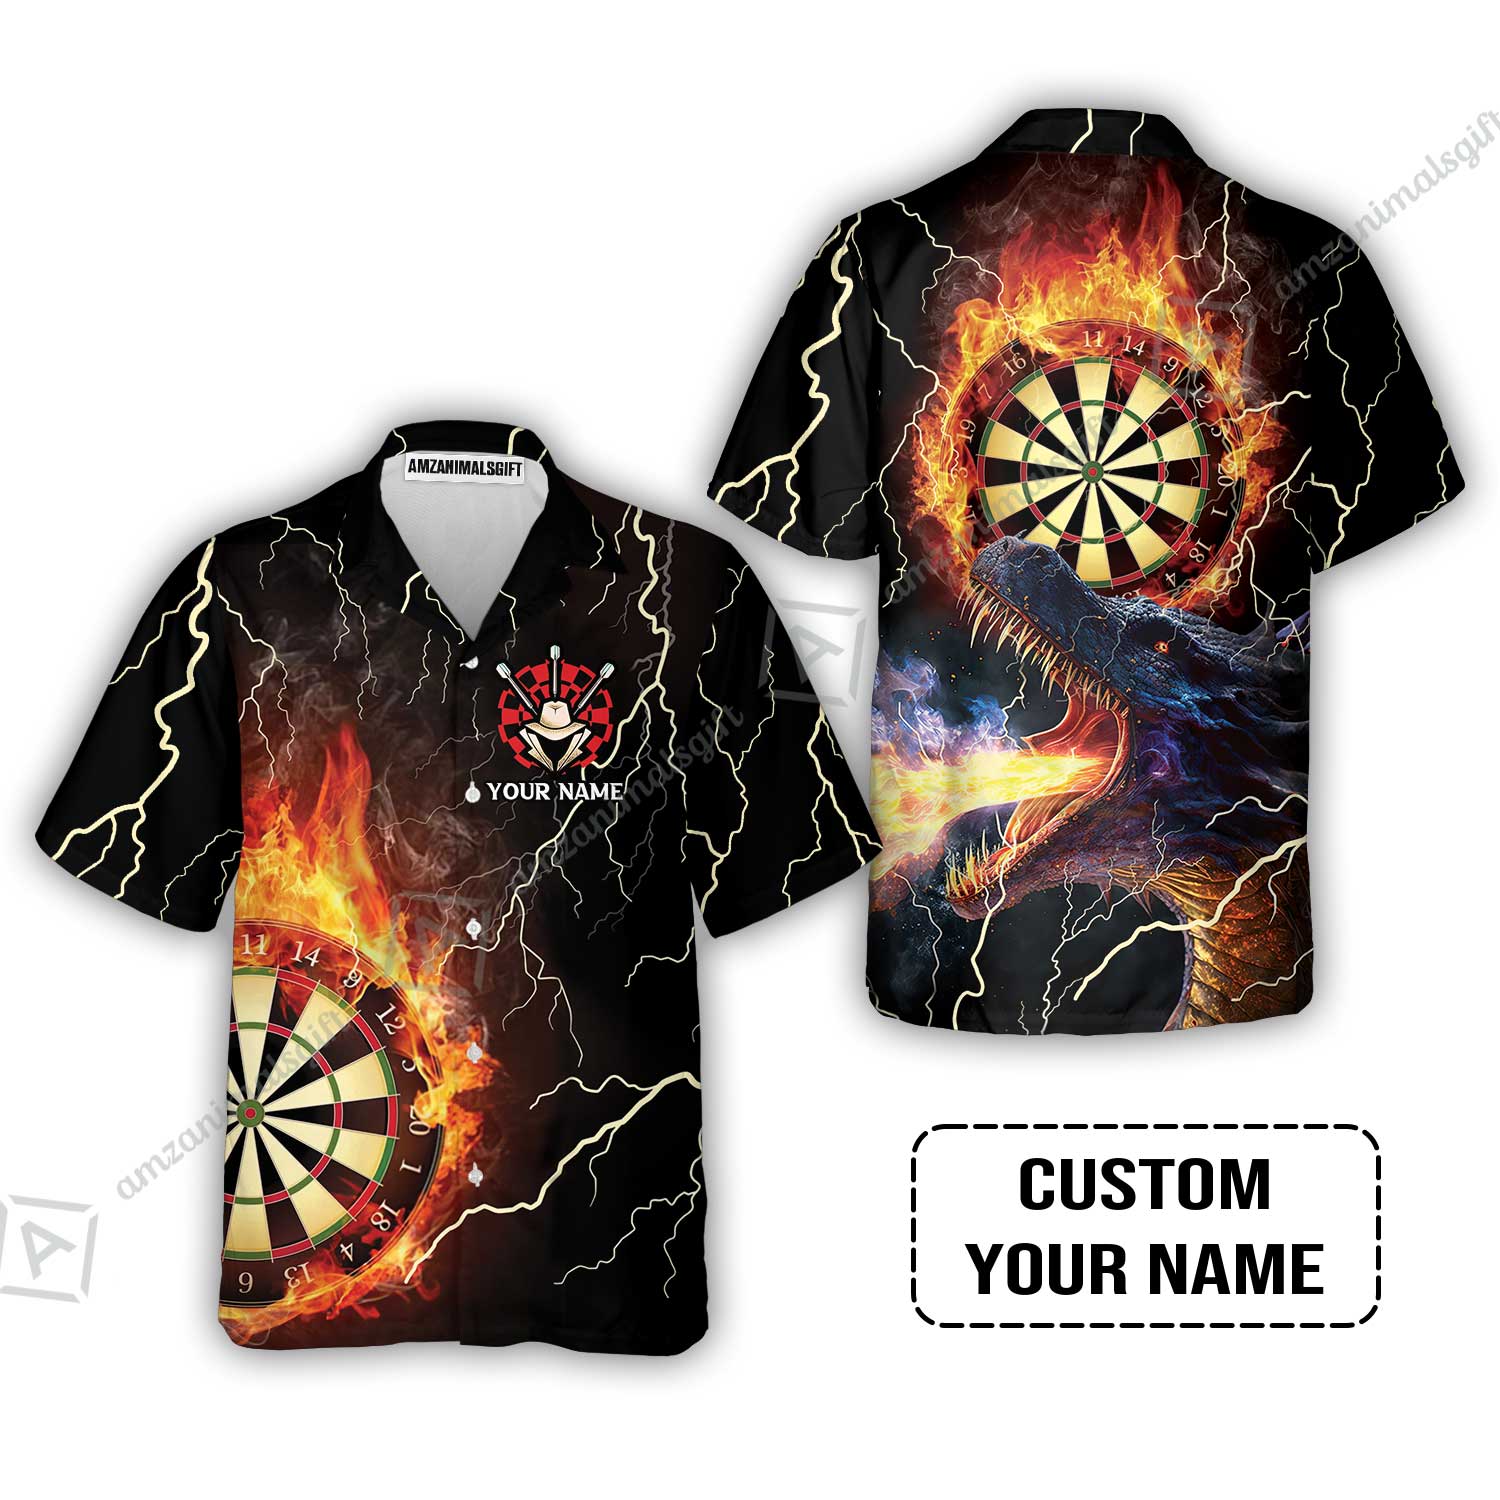 Customized Darts Hawaiian Shirt, Flame Dartboard, Personalized Name Dragon And Darts Hawaiian Shirt - Perfect Gift For Darts Lovers